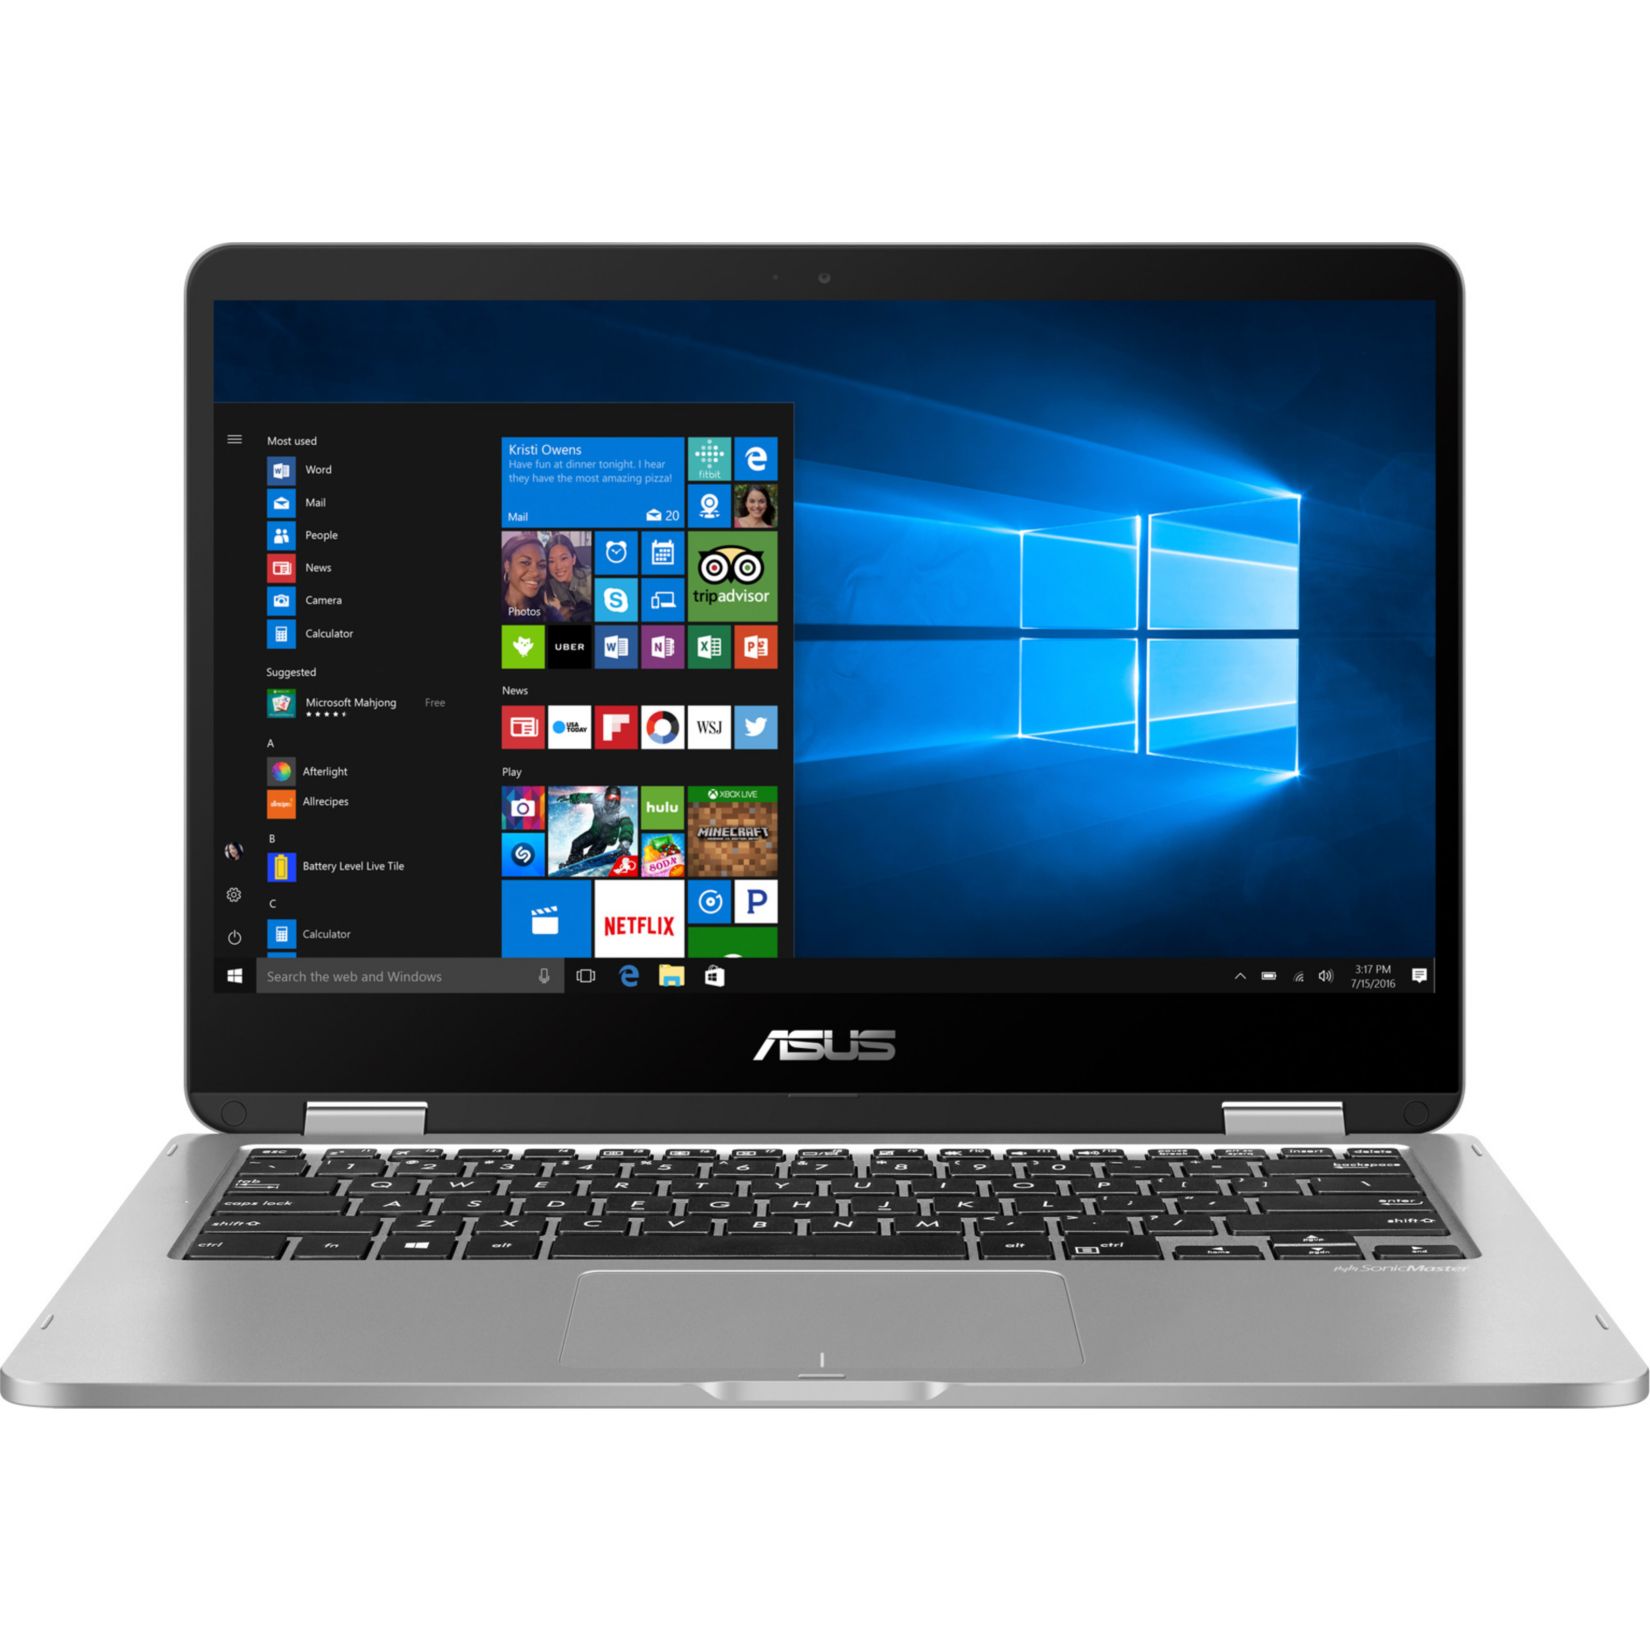 ASUS VivoBook Flip 14 | 14" Full HD | Intel Celeron N4020 | 4GB RAM | 128GB eMMC | Windows 10 Pro Education | Convertible Notebook | ASUS SMART KIT